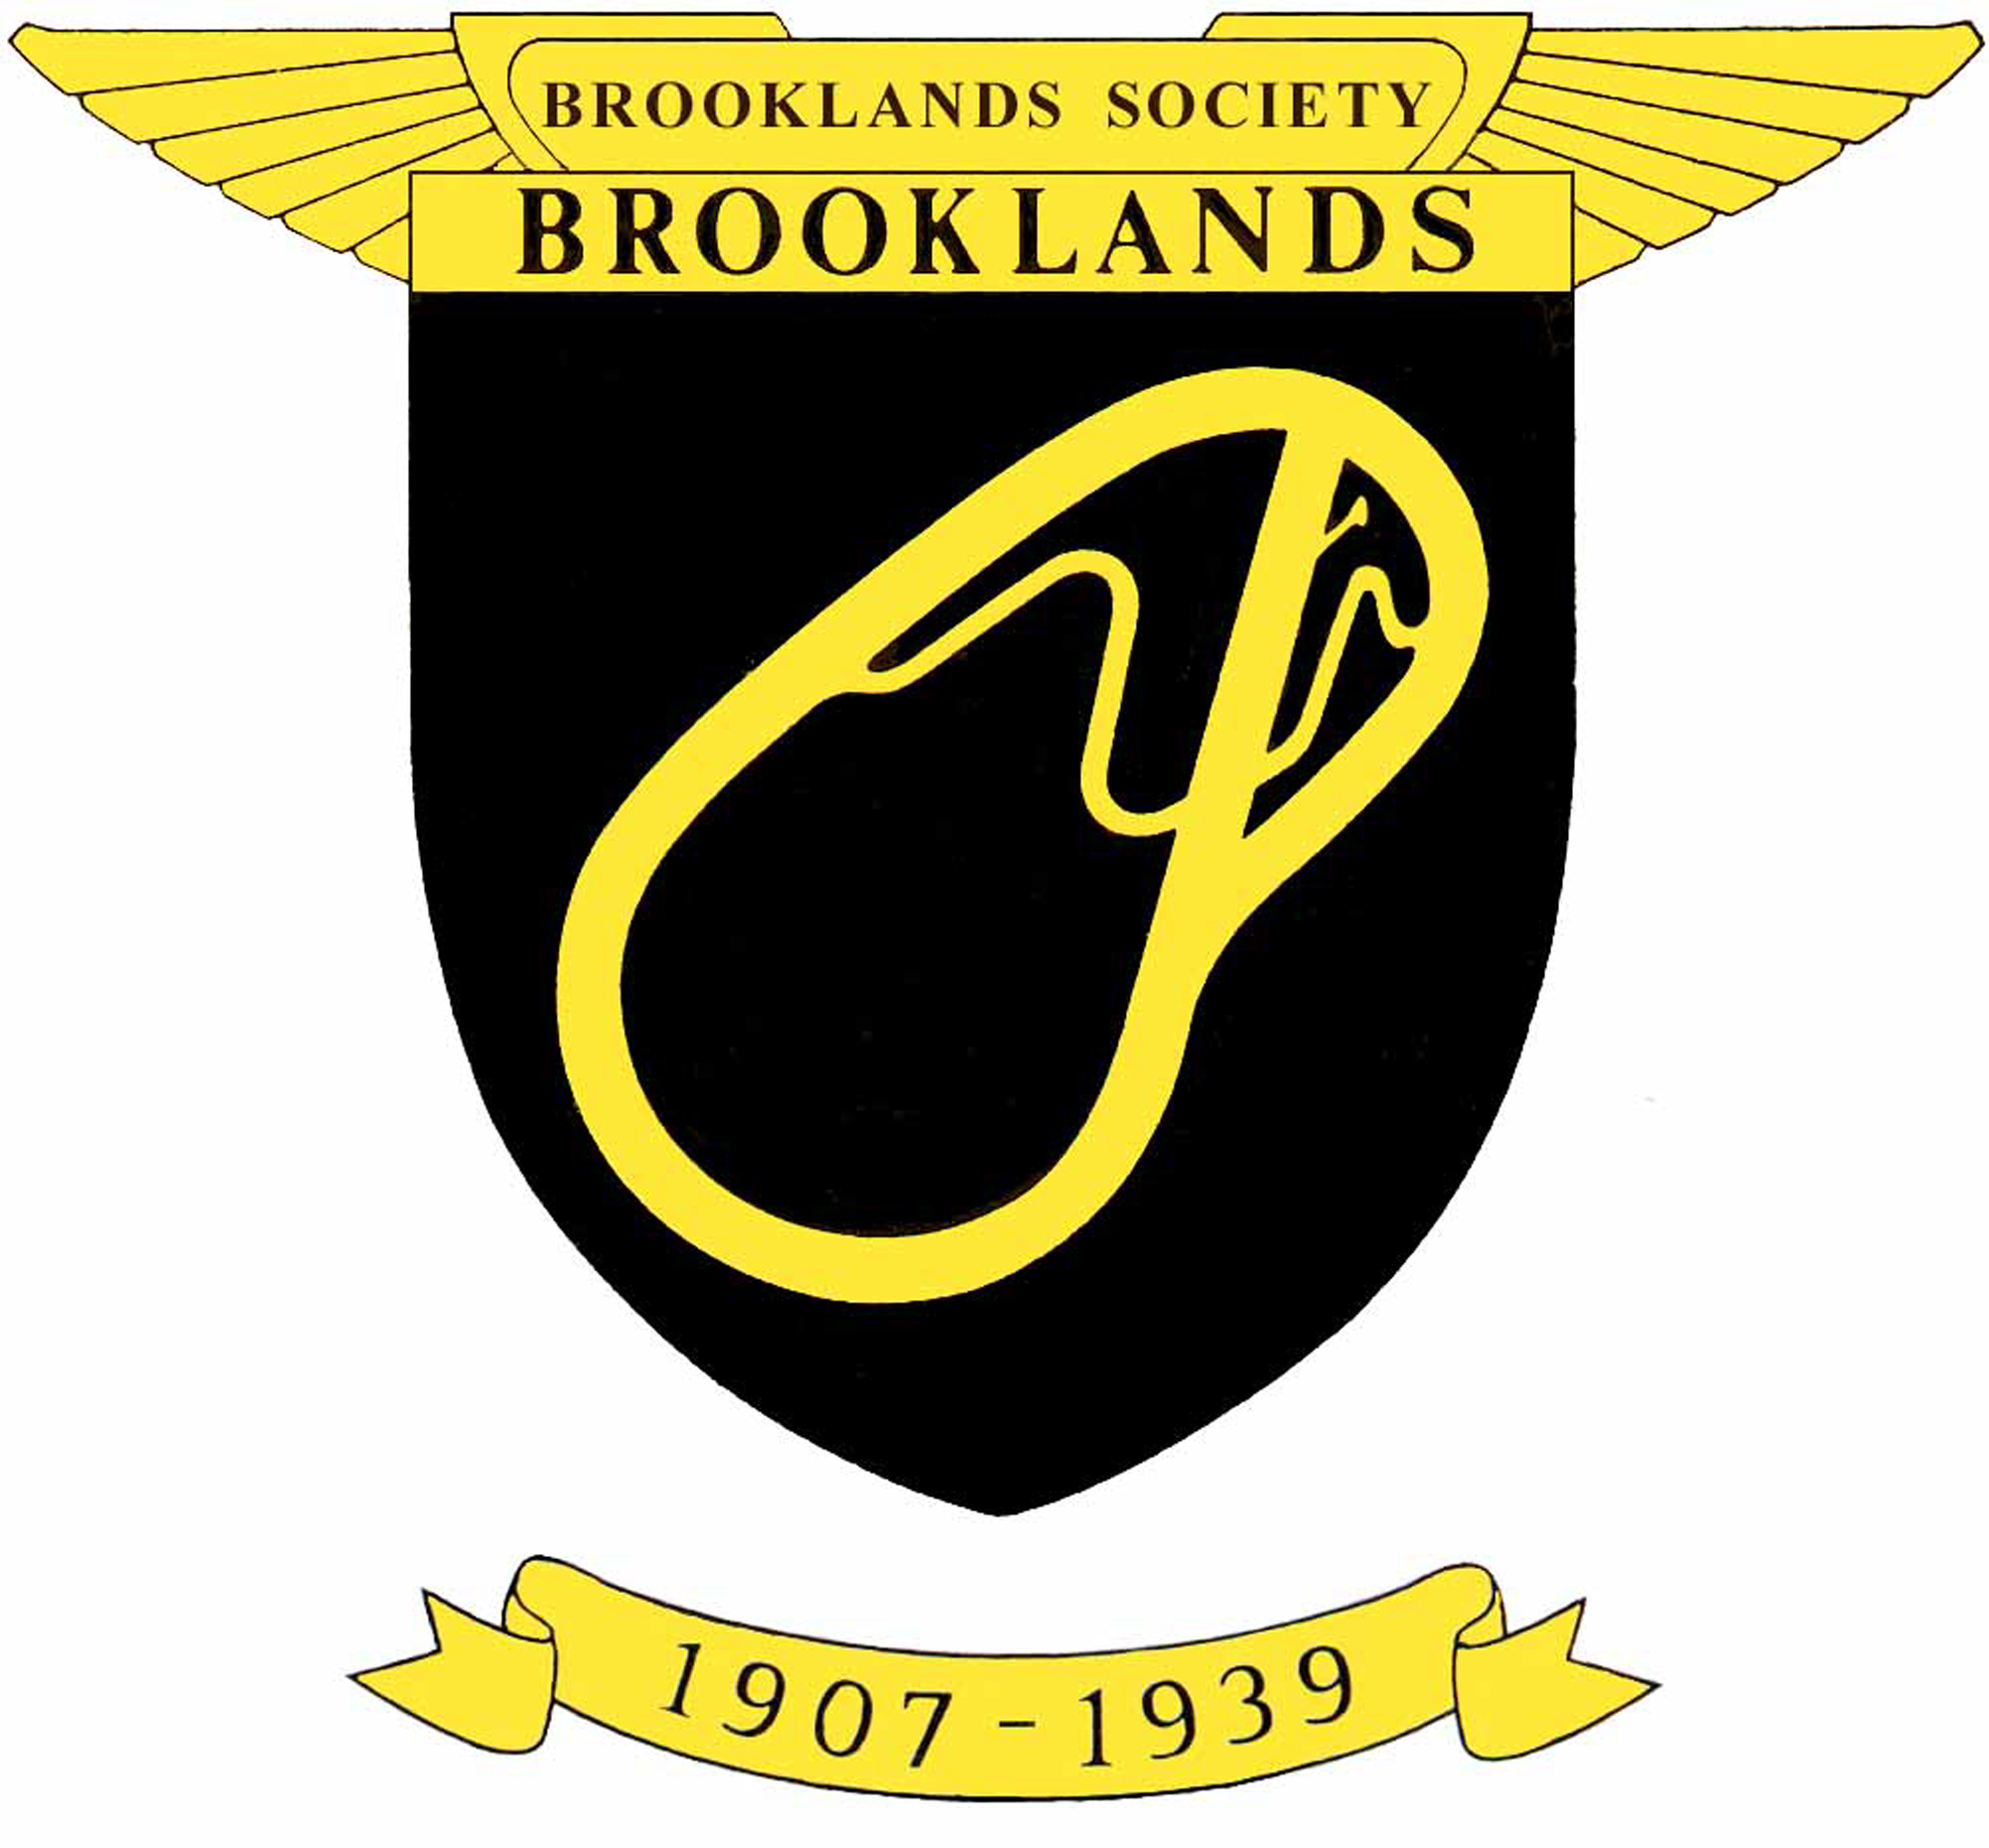 Brooklands Society image